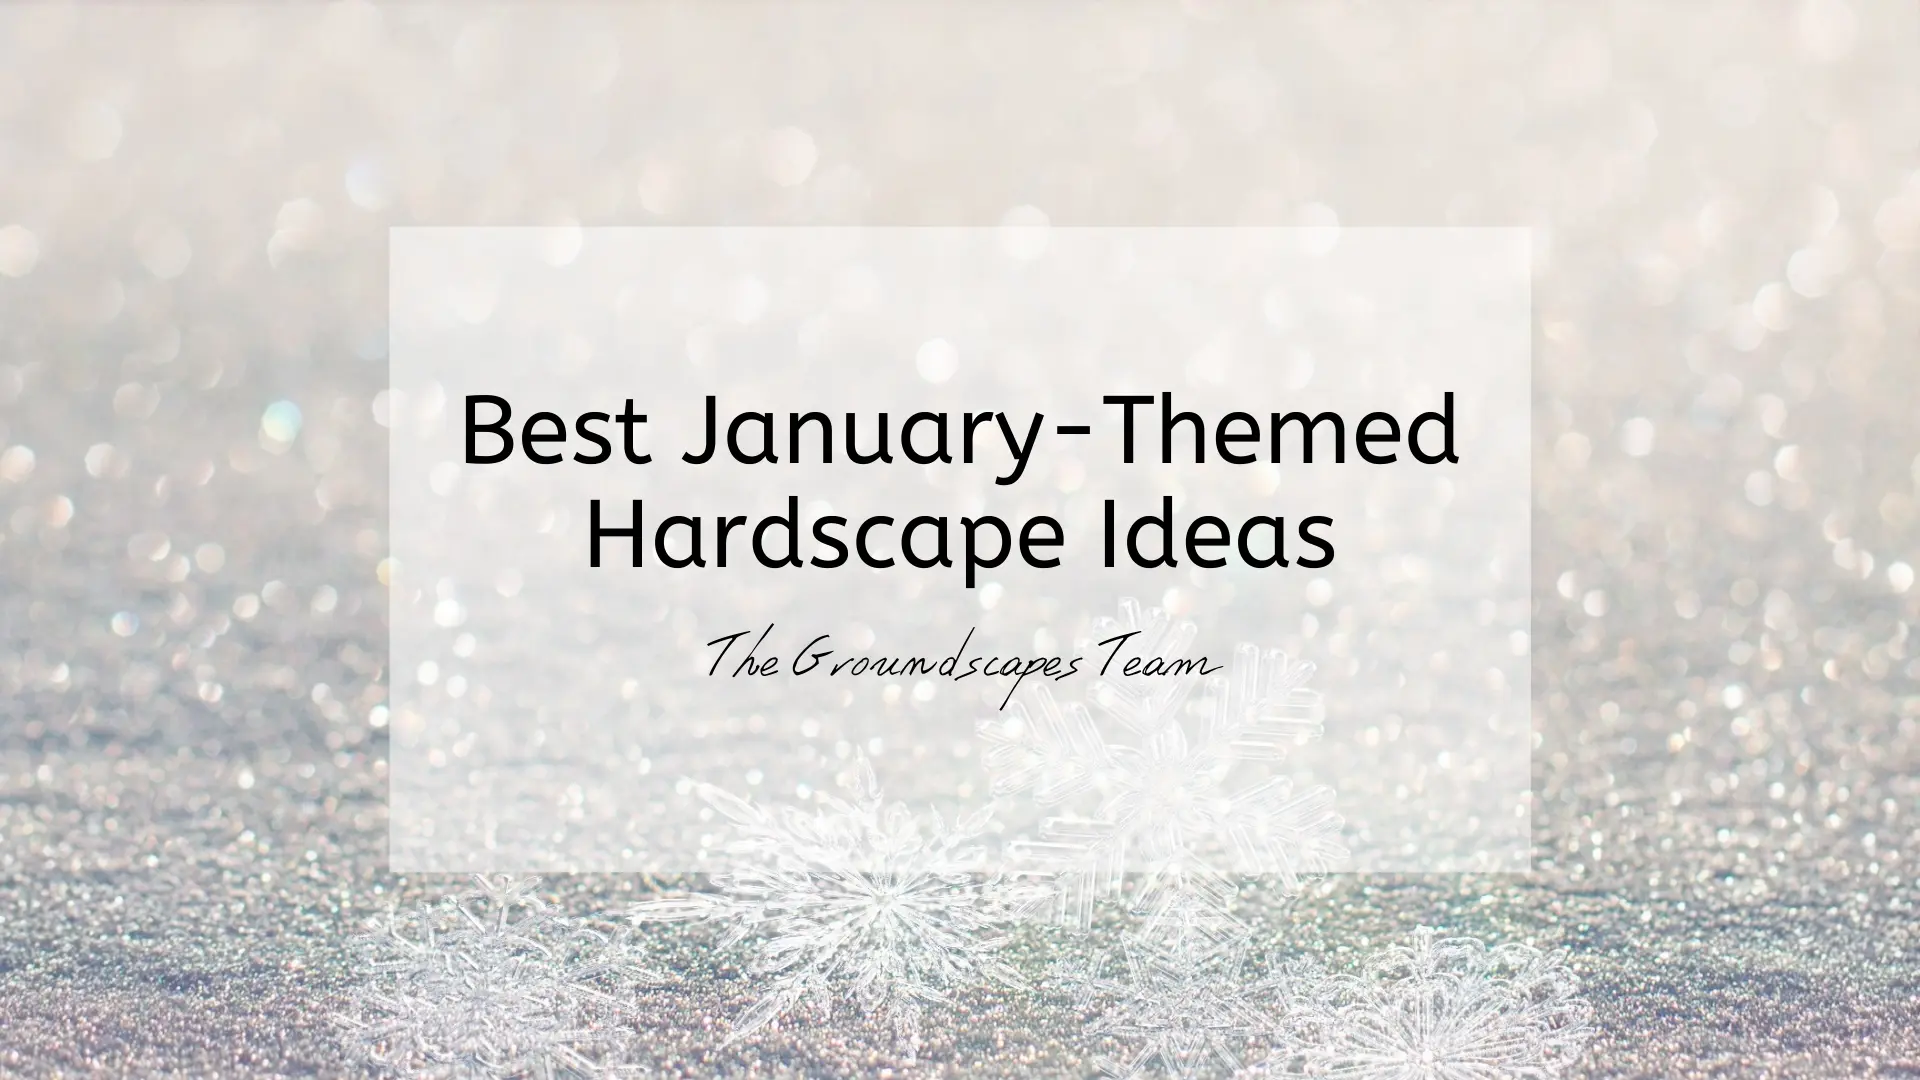 Best January-Themed Hardscape Ideas